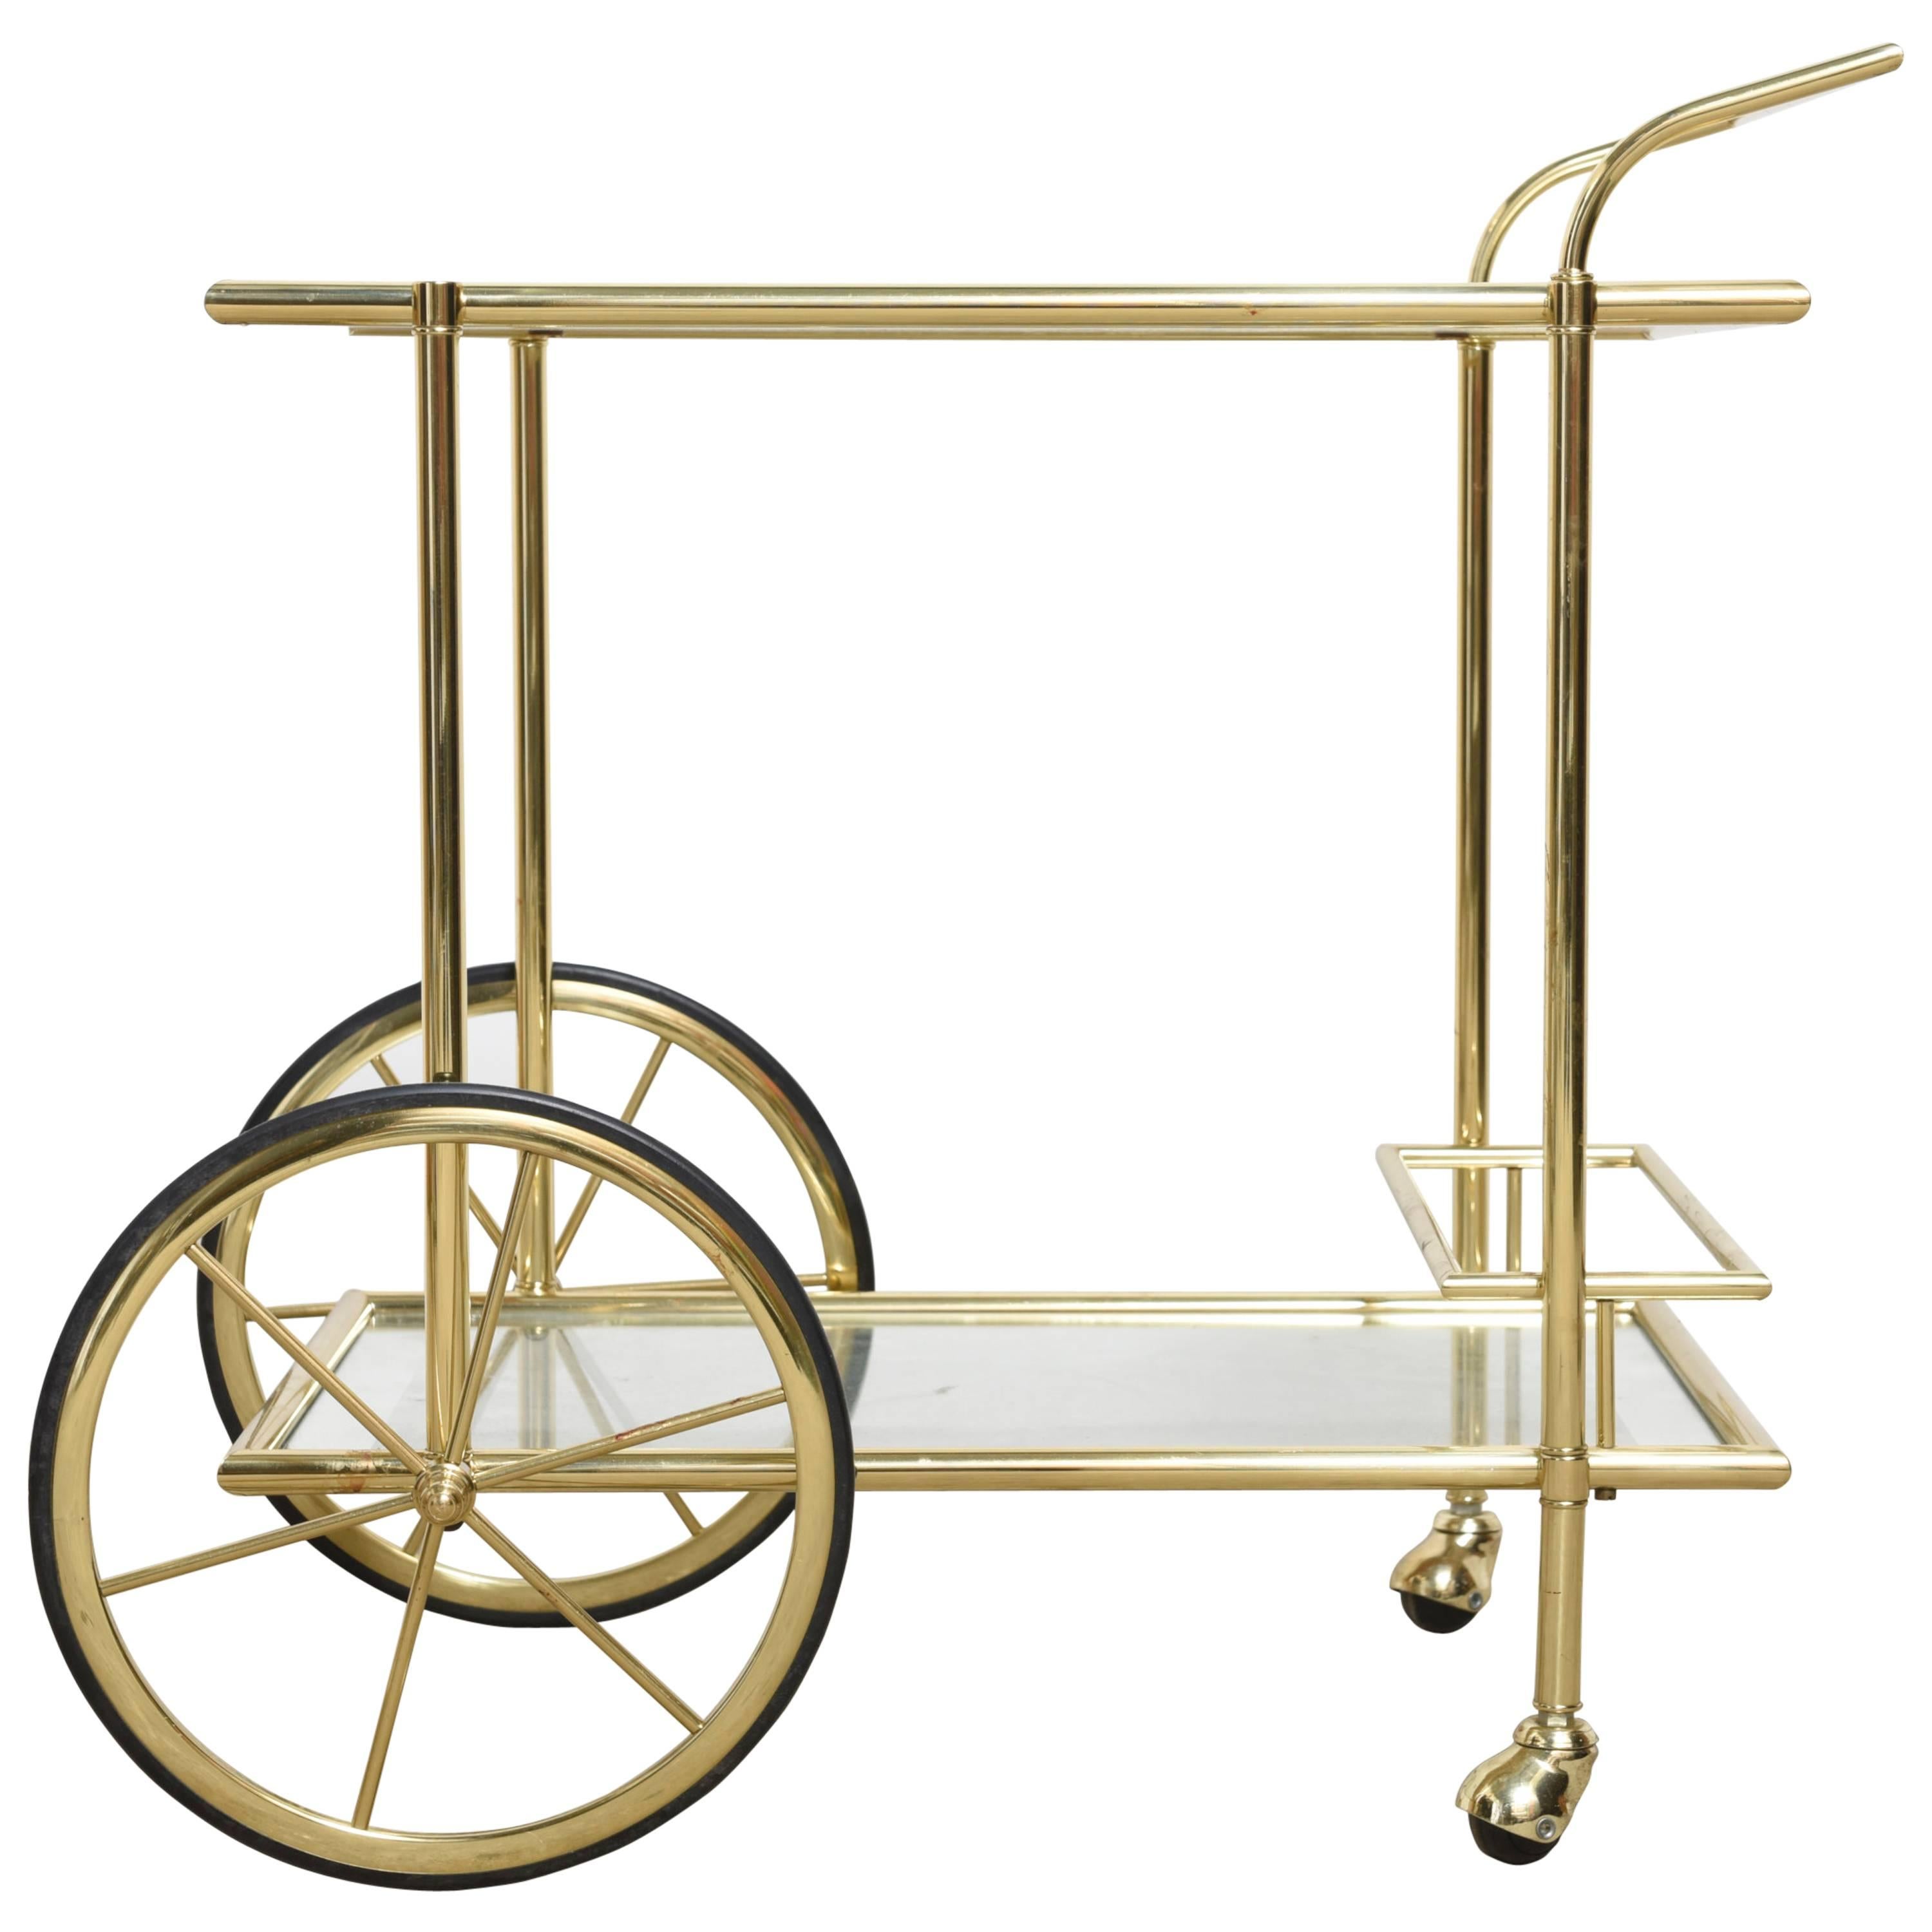 A French Fine Quality Polished Brass Bar Cart, Trolley